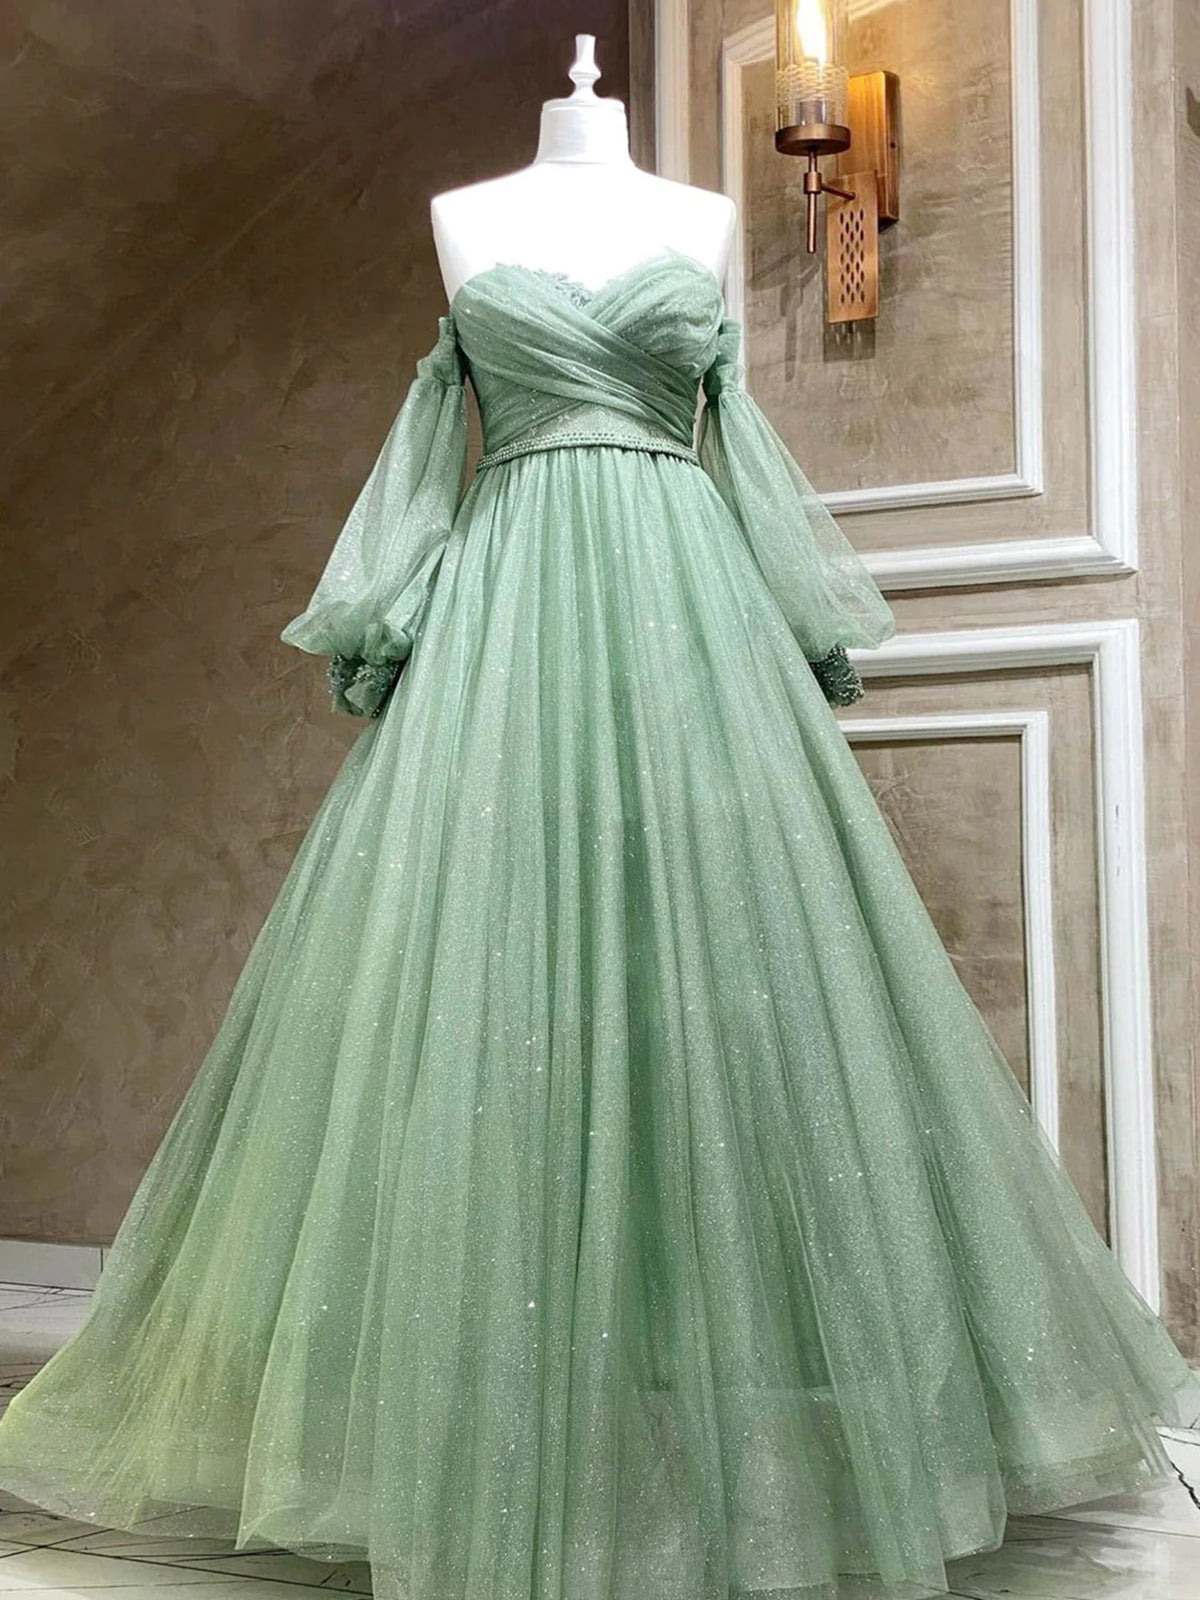 Bridesmaid Dress Purple, A Line Sweetheart Neck Long Sleeves Green Tulle Long Prom Dress, Long Green Formal Evening Dress